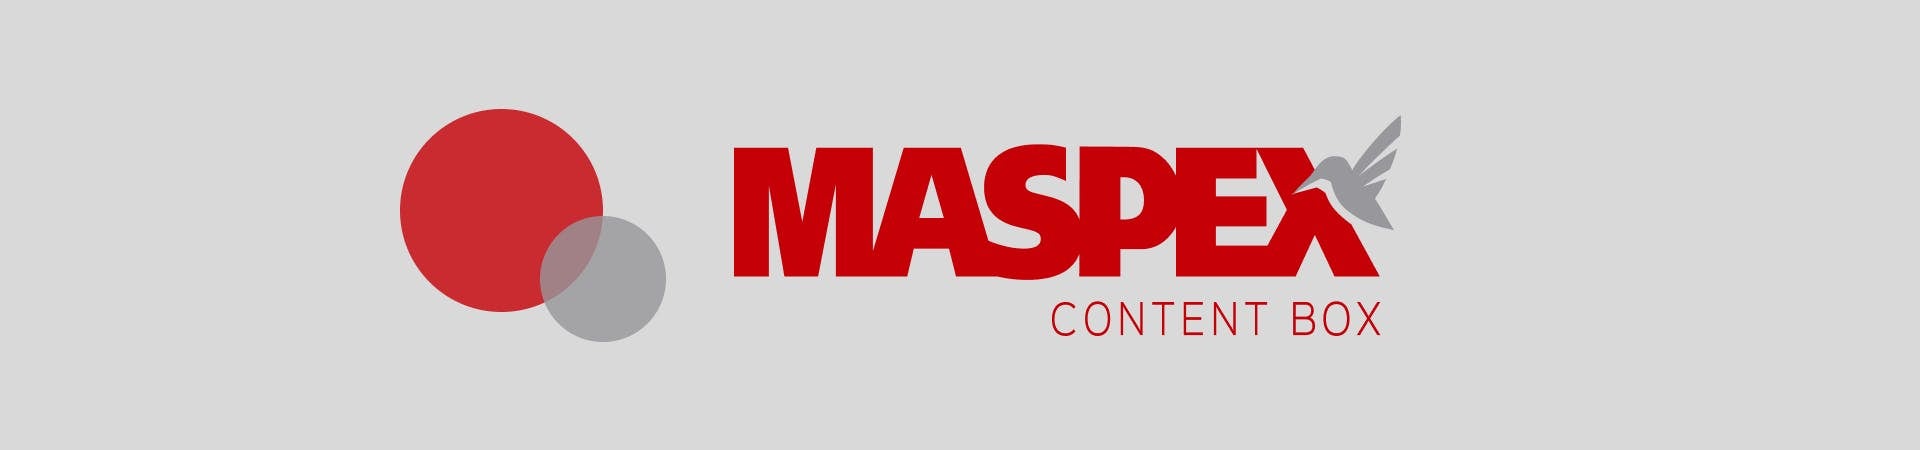 Banner with Maspex ContentBox logo